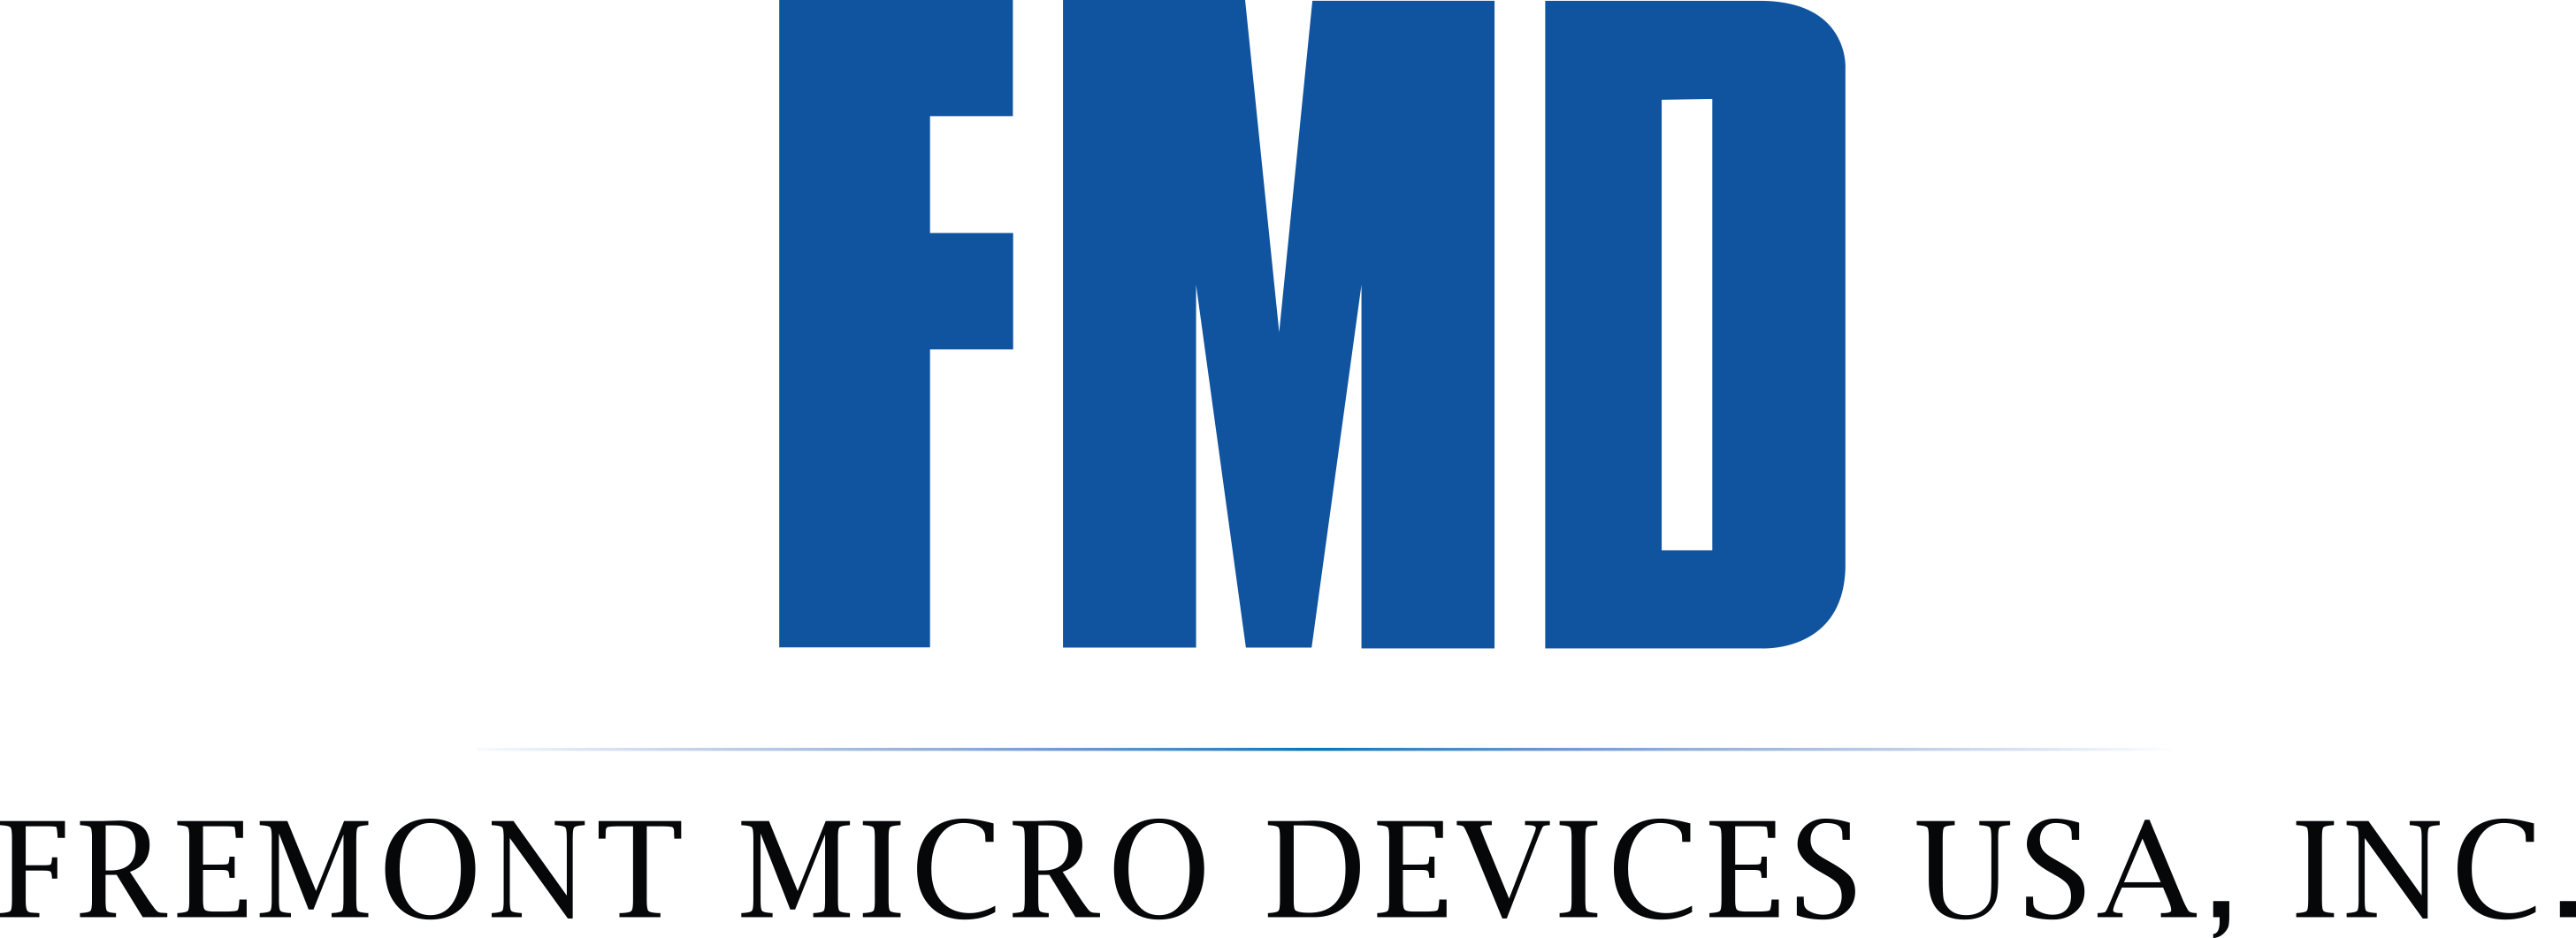 Fremont Micro Devices Ltd LOGO